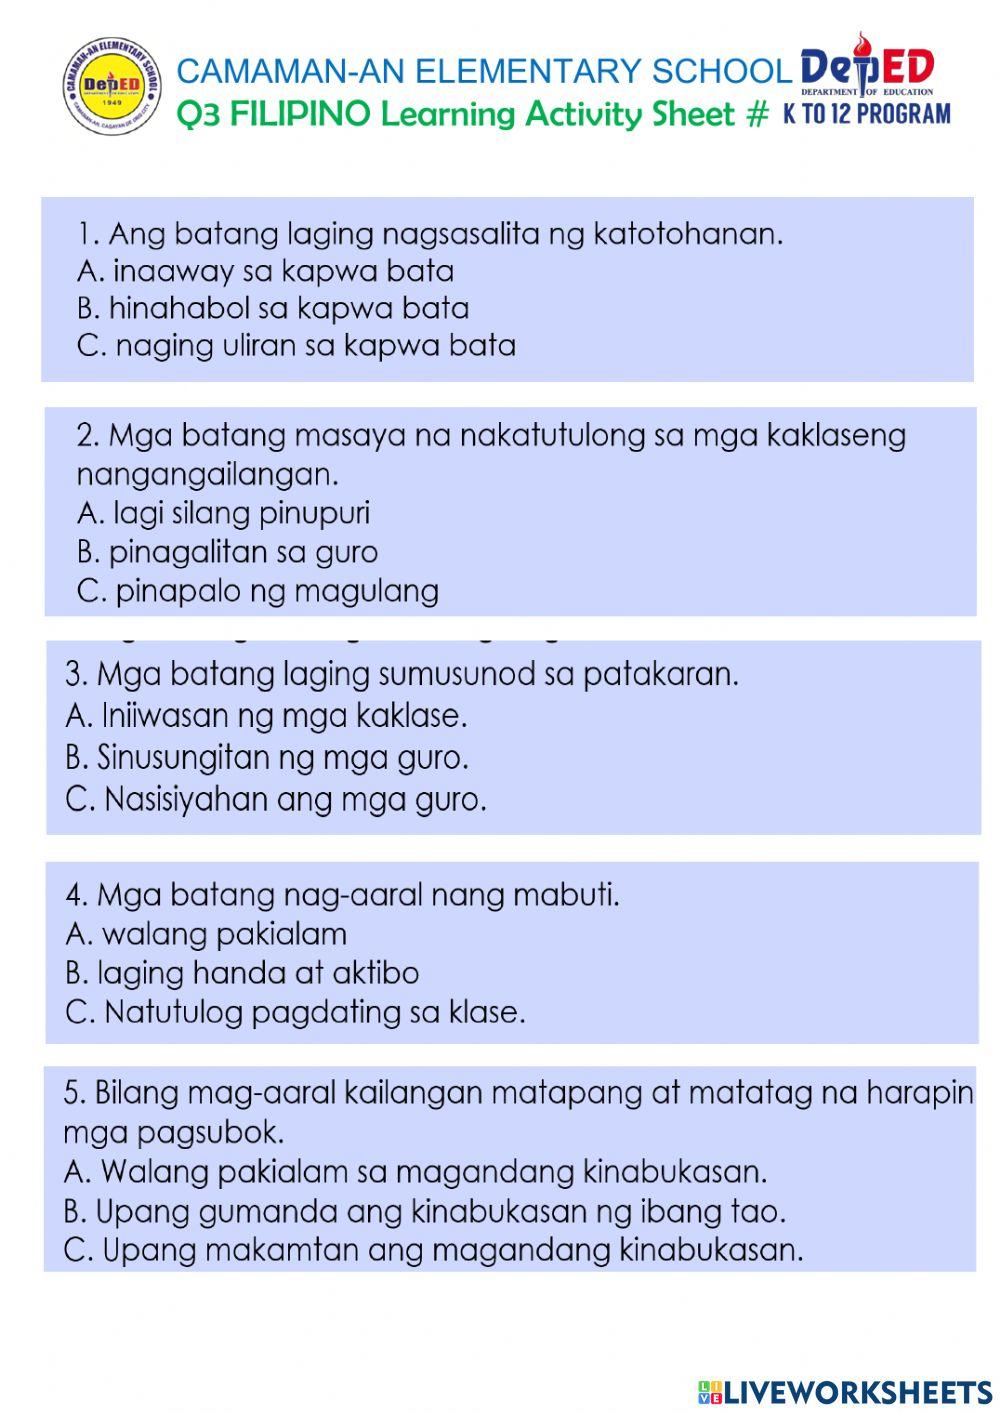 Q3 week 2 filipino learning act. sheet 3